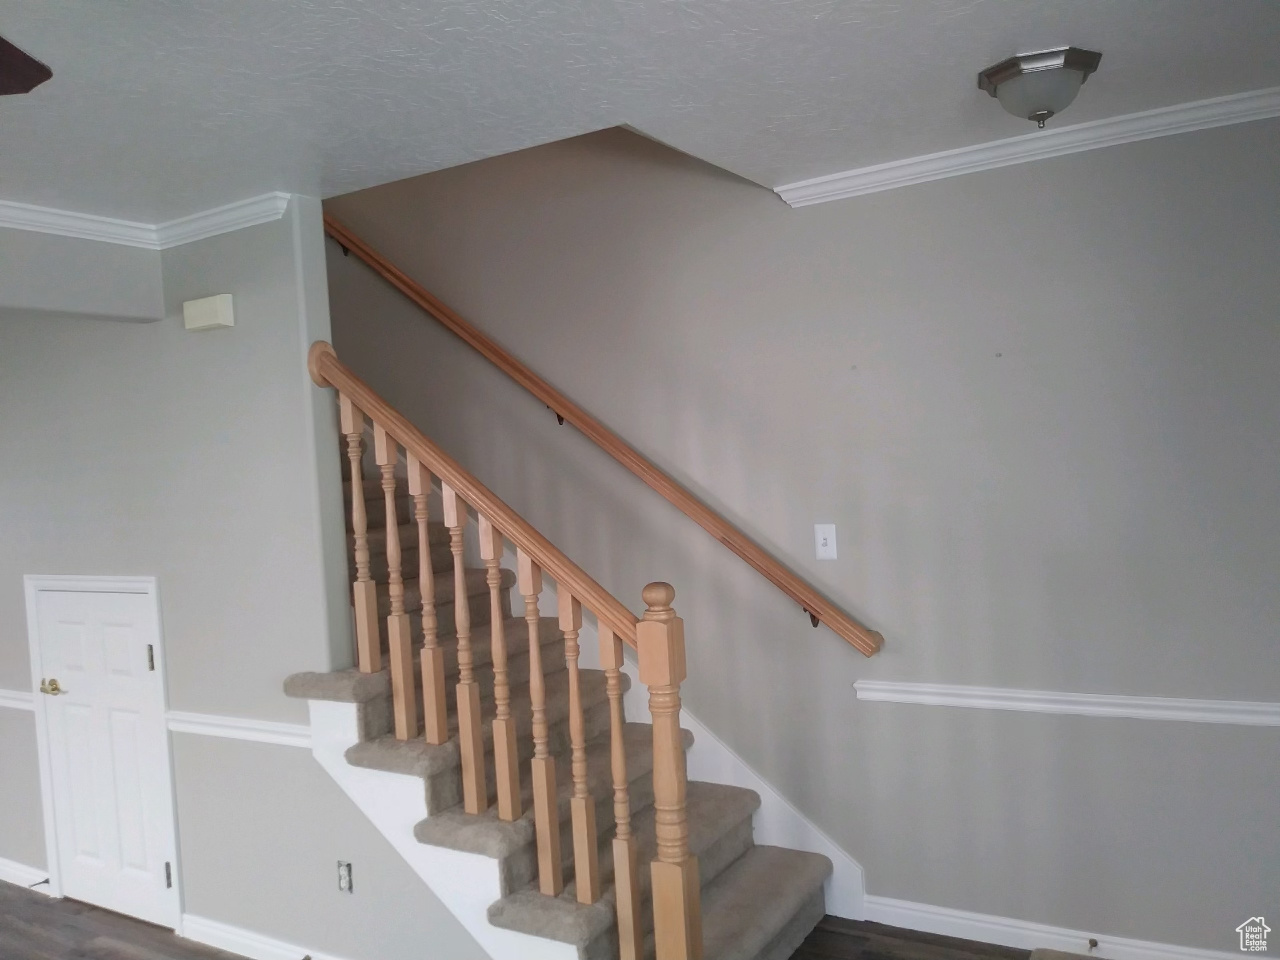 Stairway featuring crown molding and dark wood-type flooring